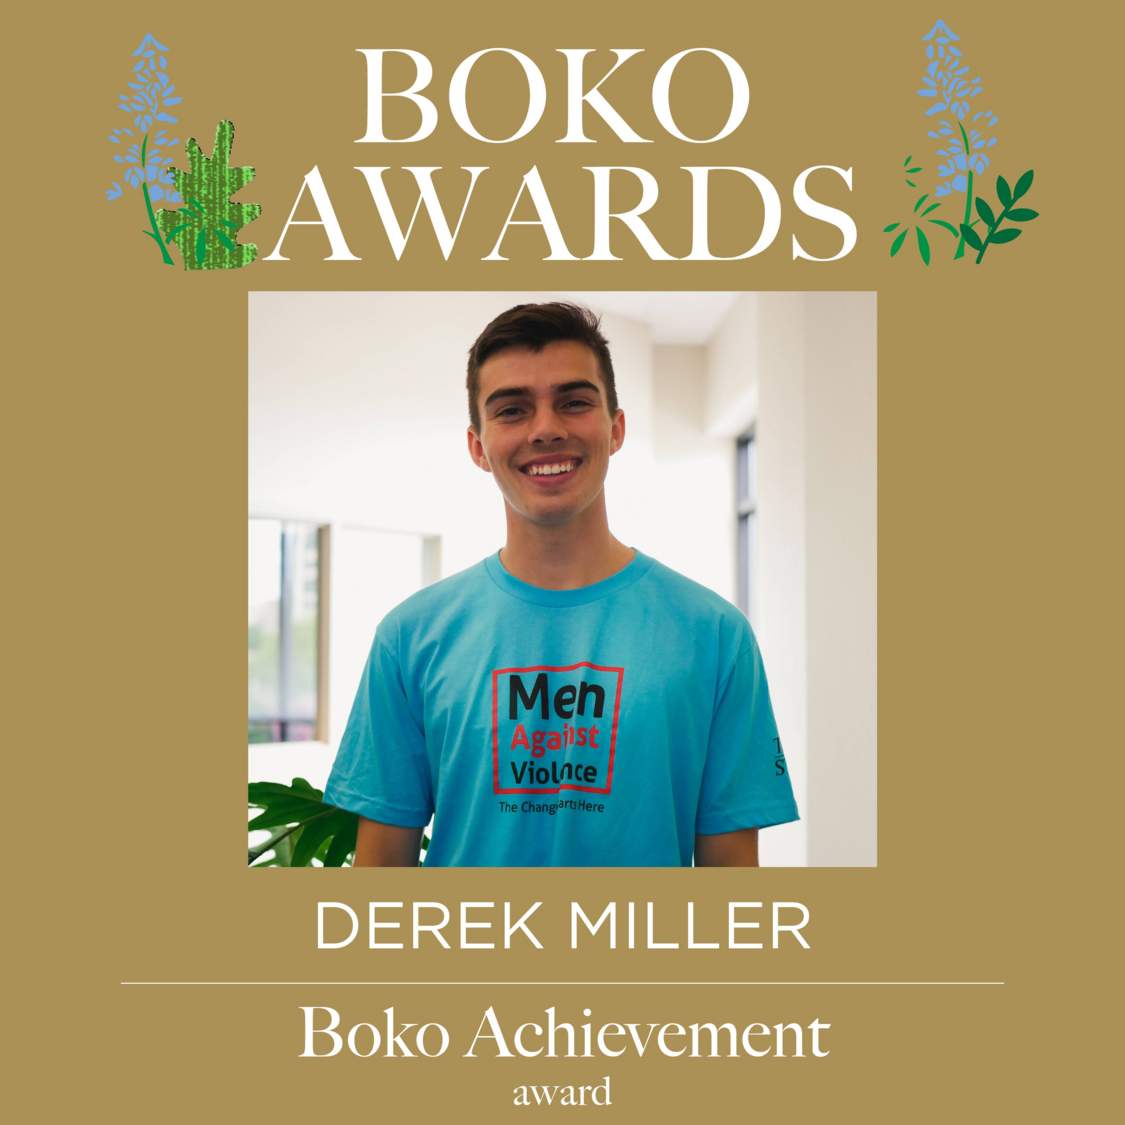 Picture of text displaying that Derek Miller won the Boko Lifetime Achievement award.